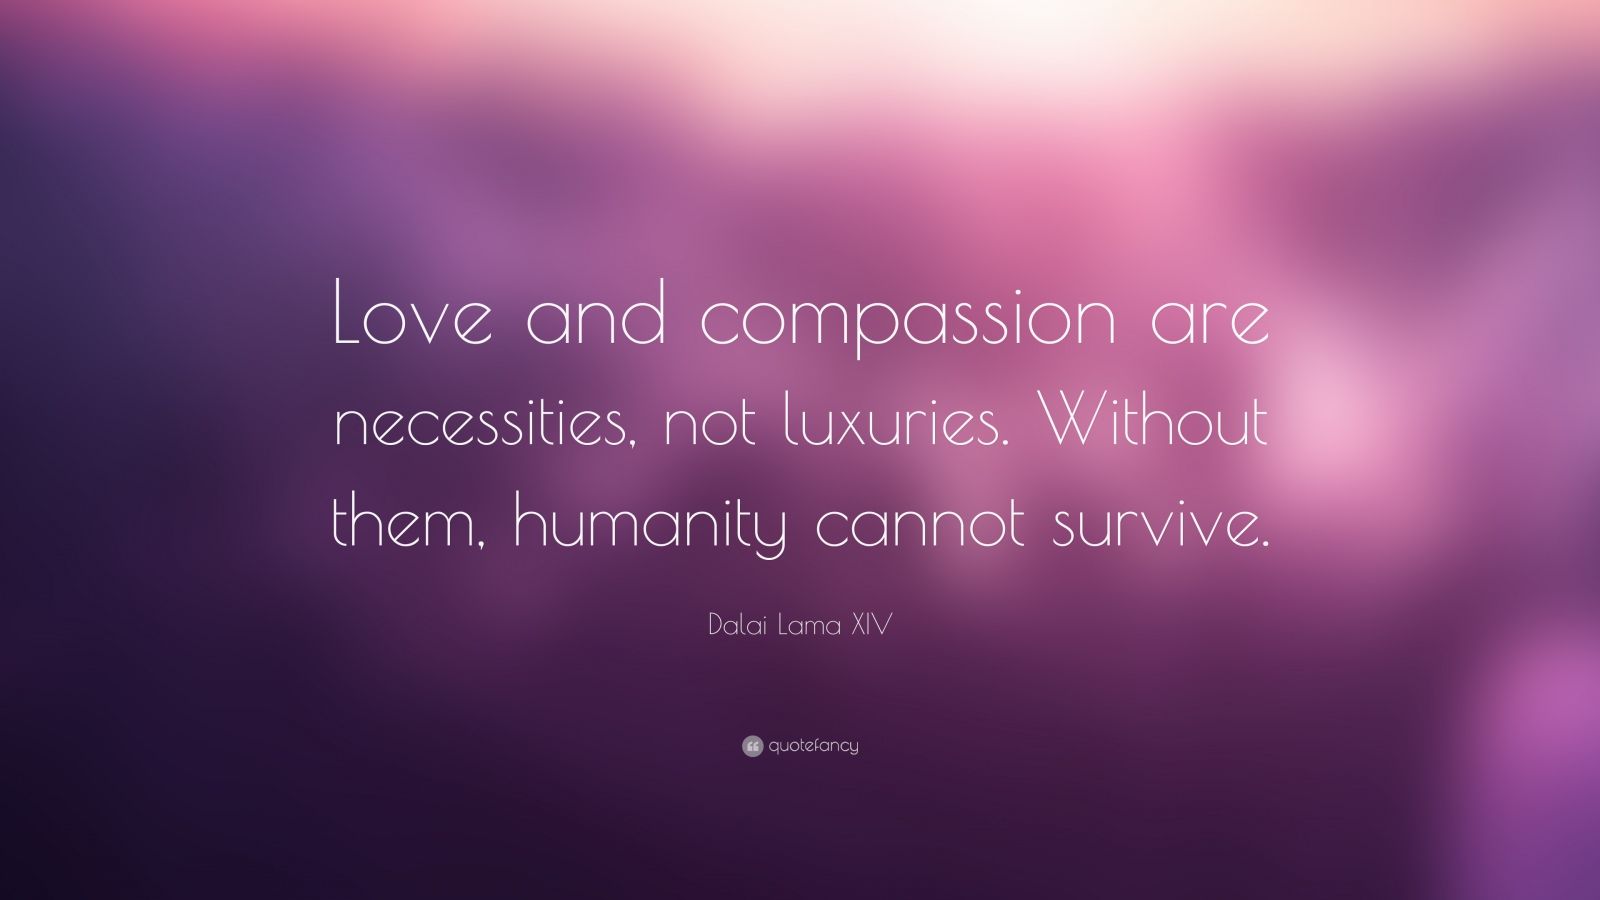 dalai lama quotes on compassion